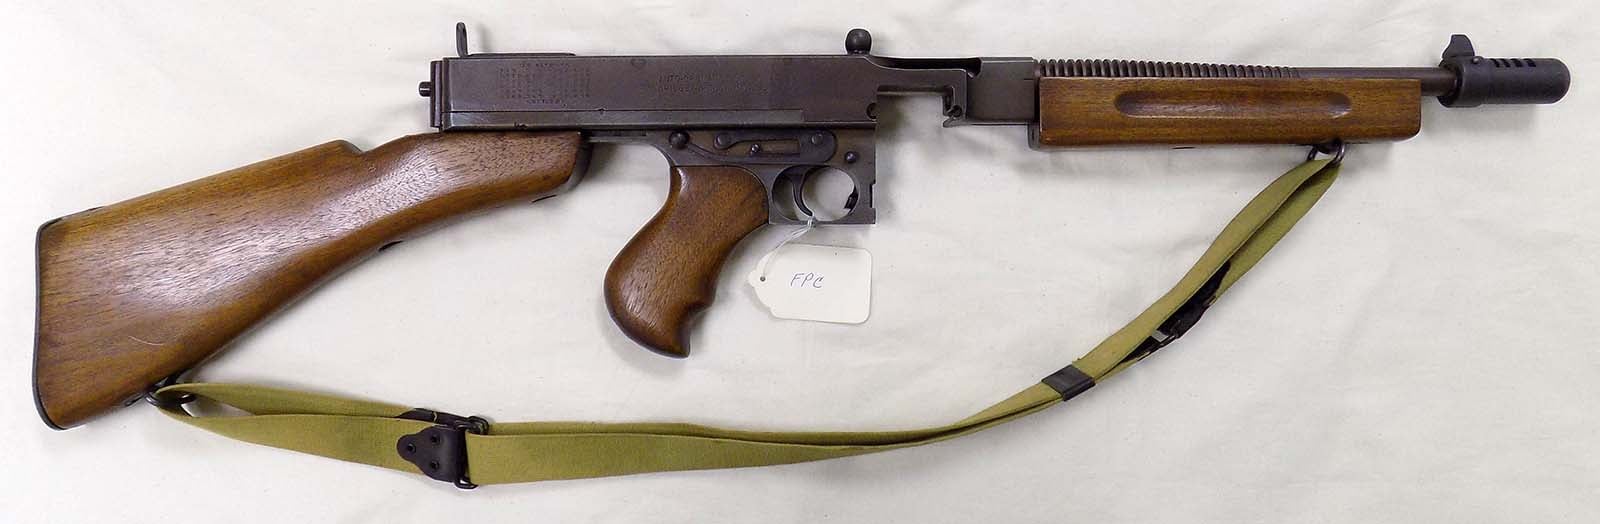 M1928 Thompson Automatic Rifle